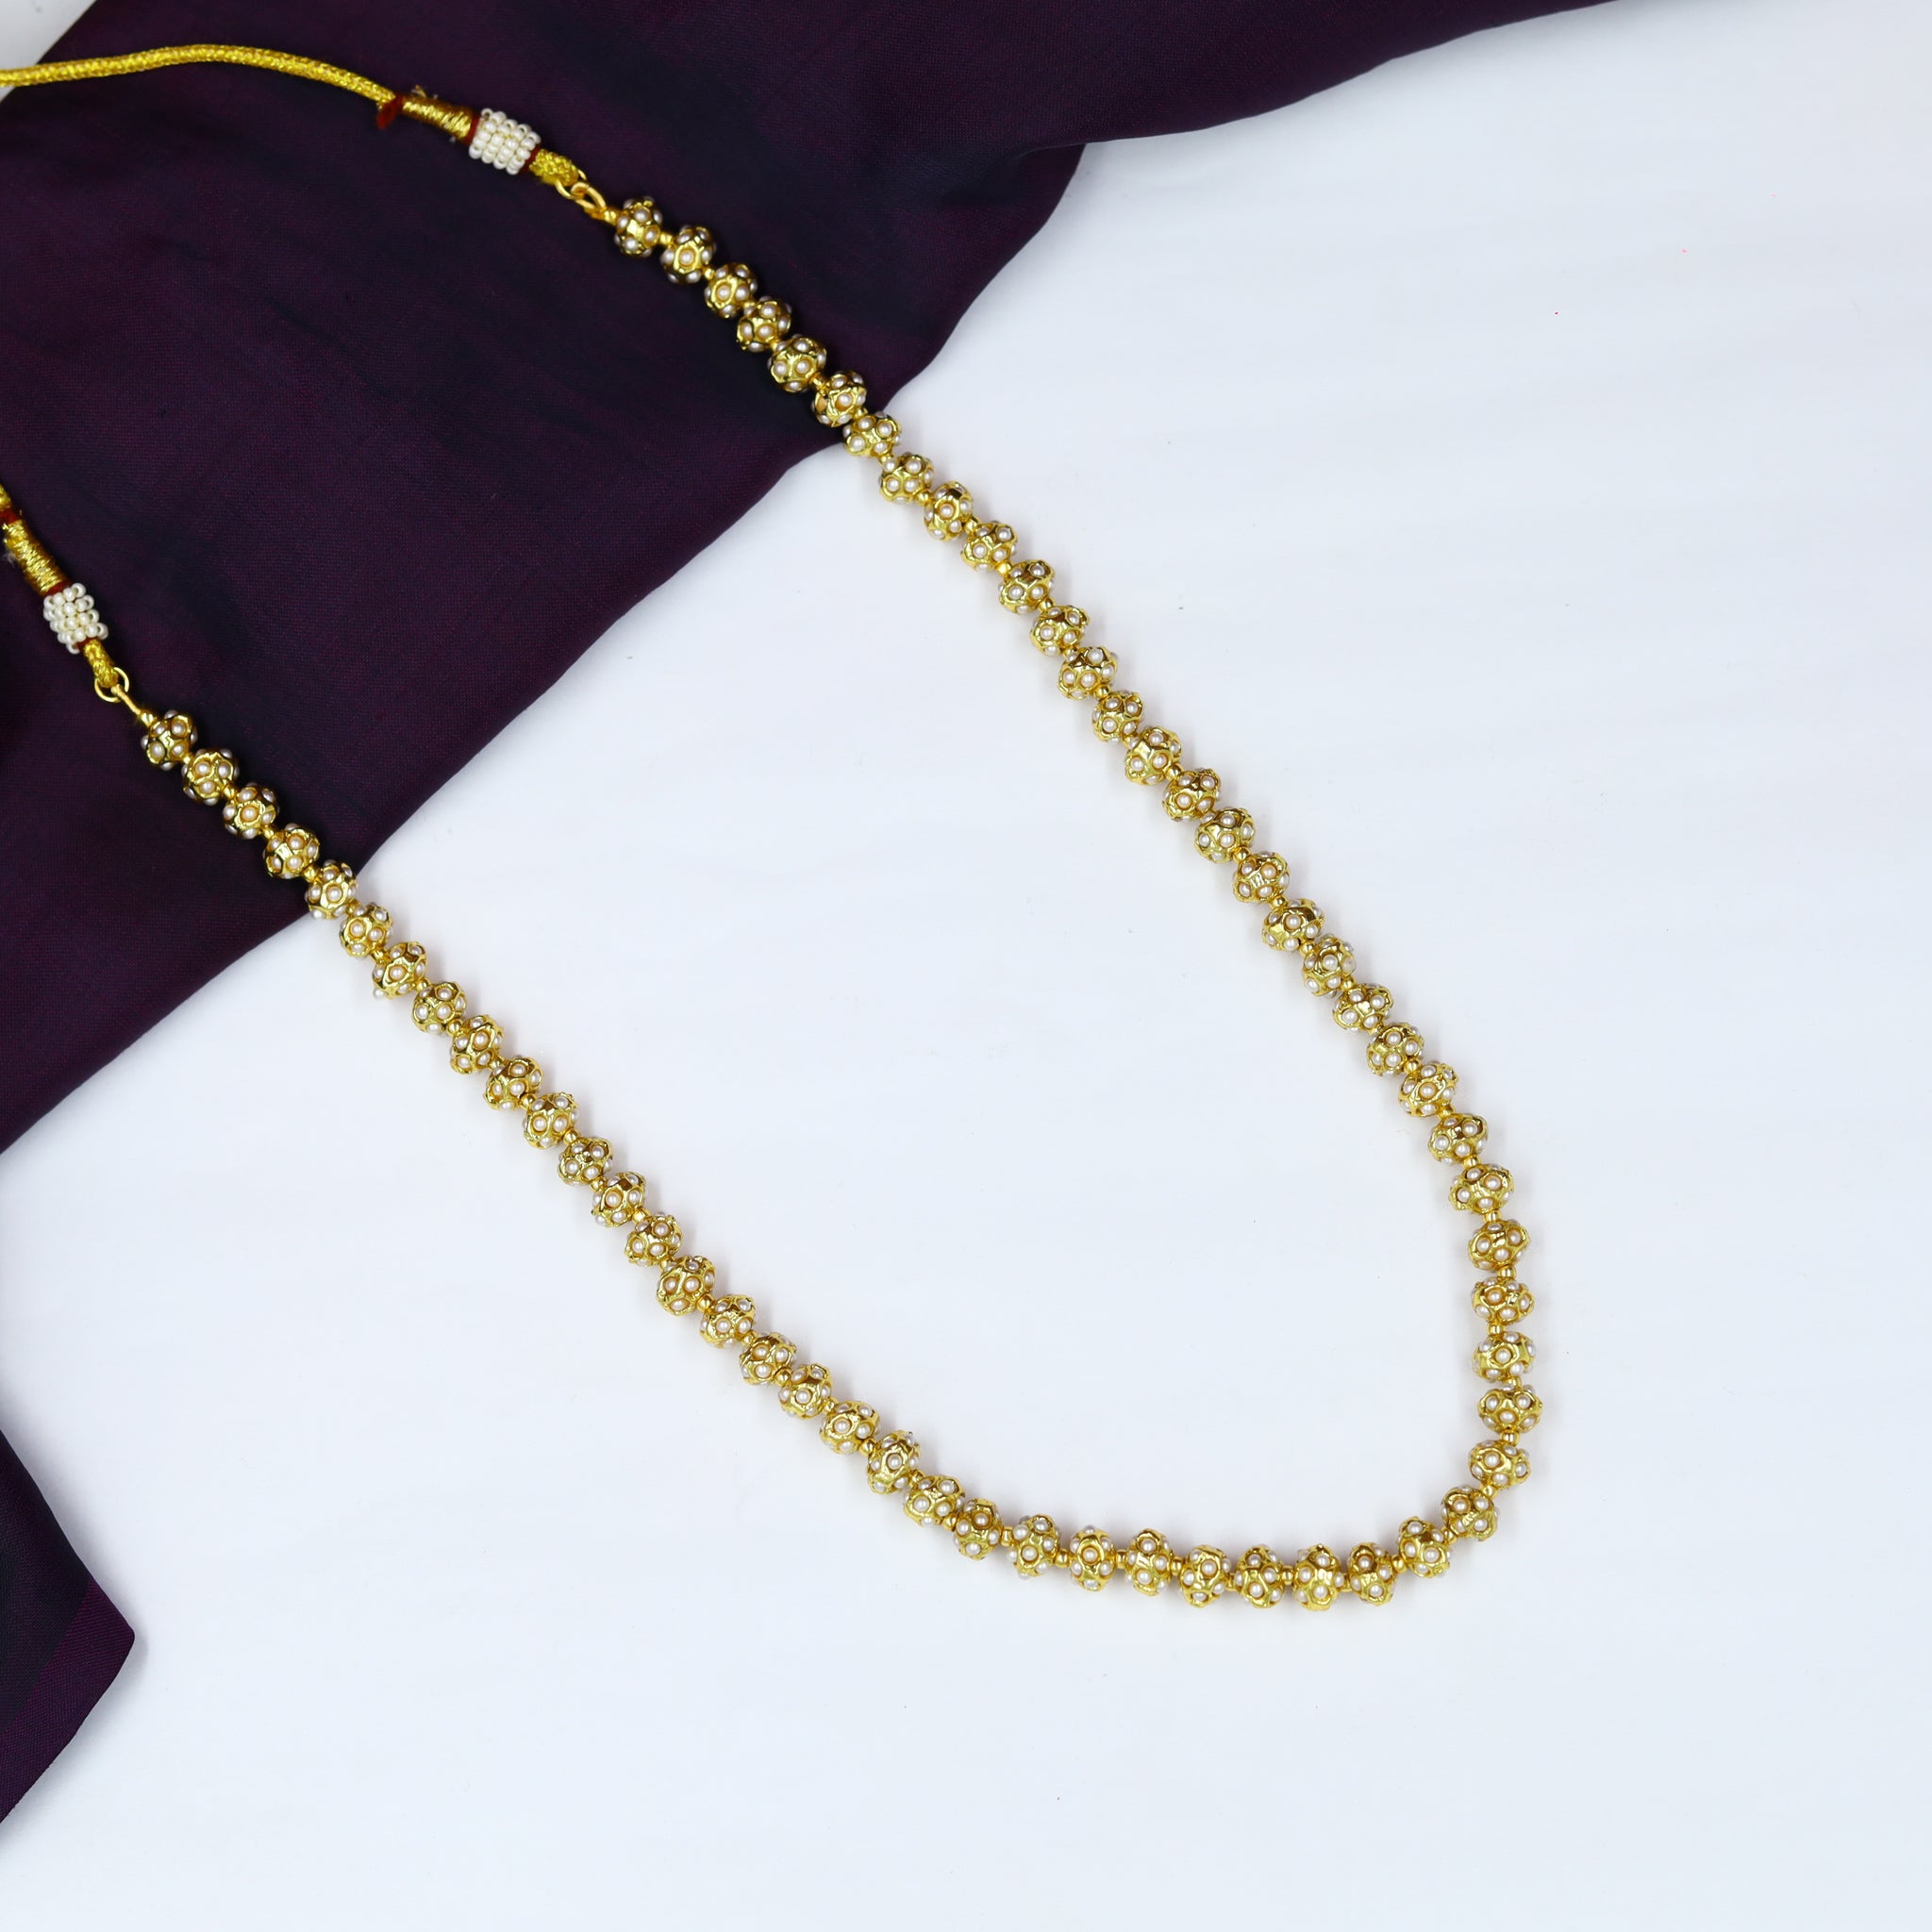 Gold Beads Malal Necklace Set 13358-21